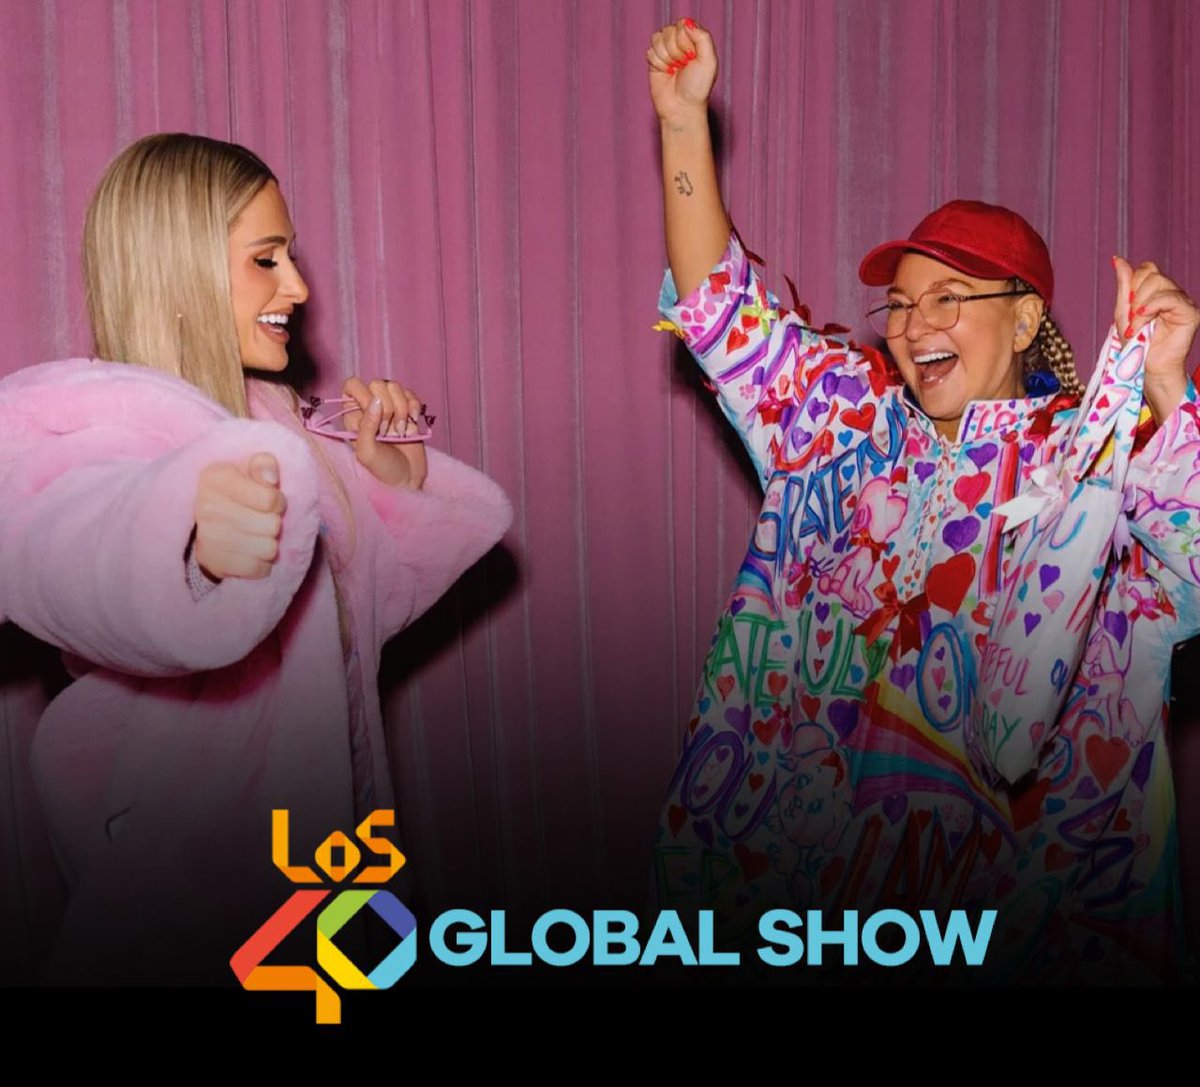 Este domingo en #40GlobalShow451 para España y Latinoamérica escucharemos a @Sia y @ParisHilton con FAME WON’T LOVE YOU  🎶✨ @40GlobalShow